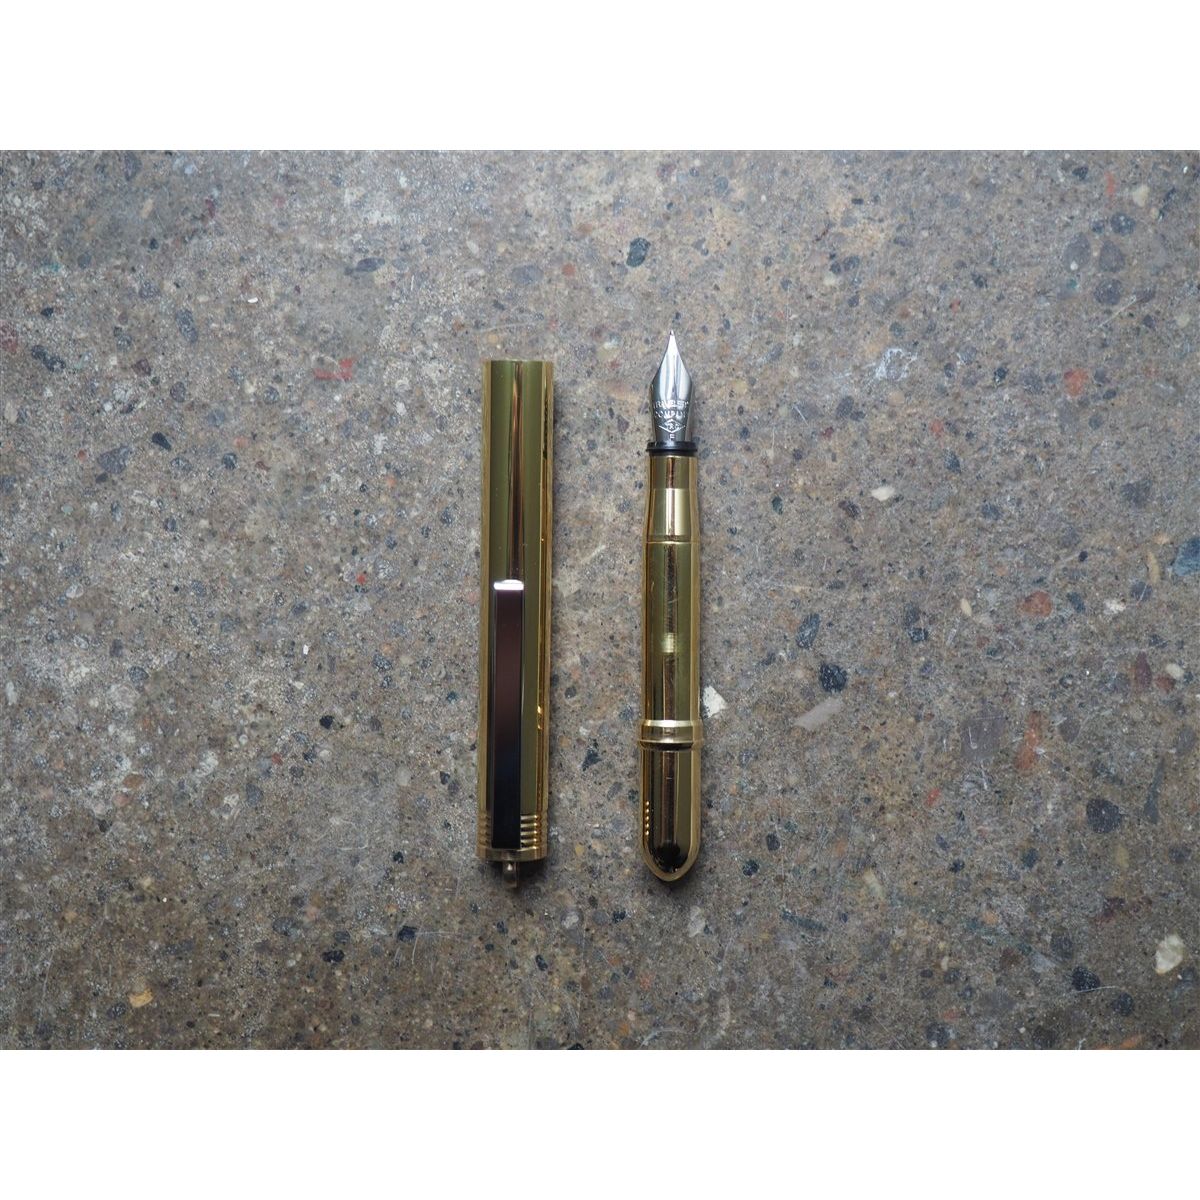 Traveller's company Brass Ballpoint pen